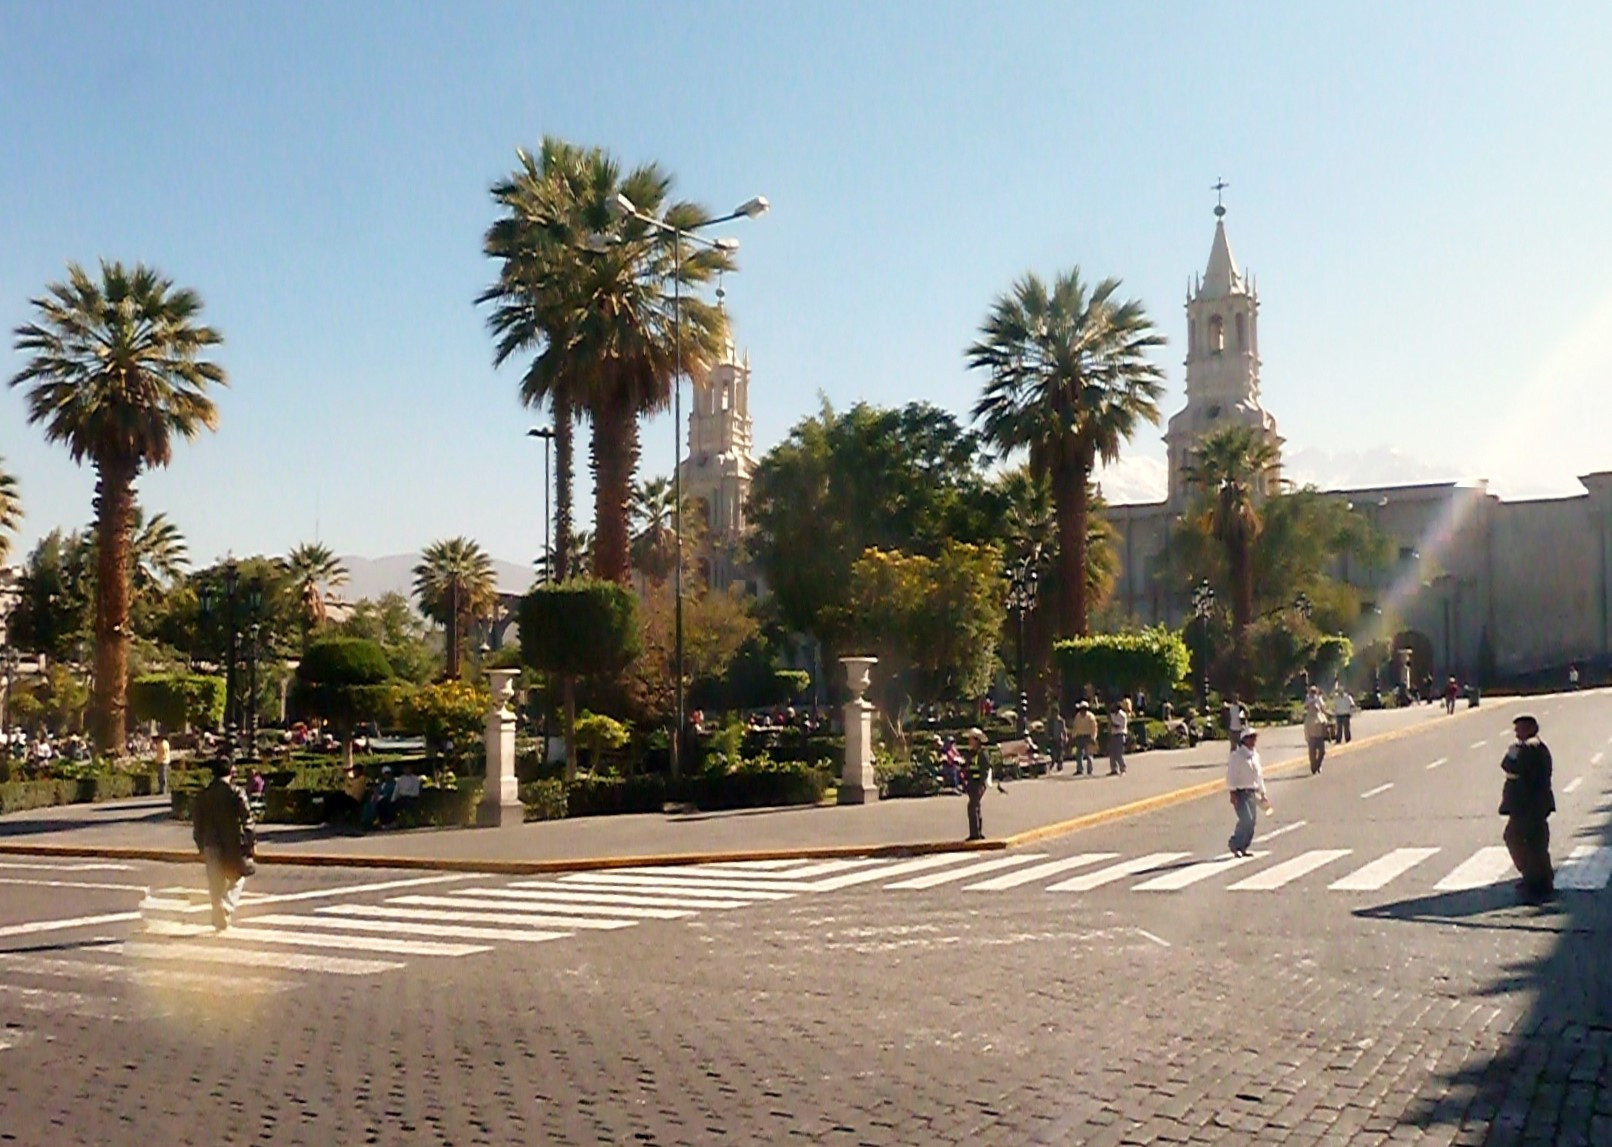 Plaza de Armas Arequipa